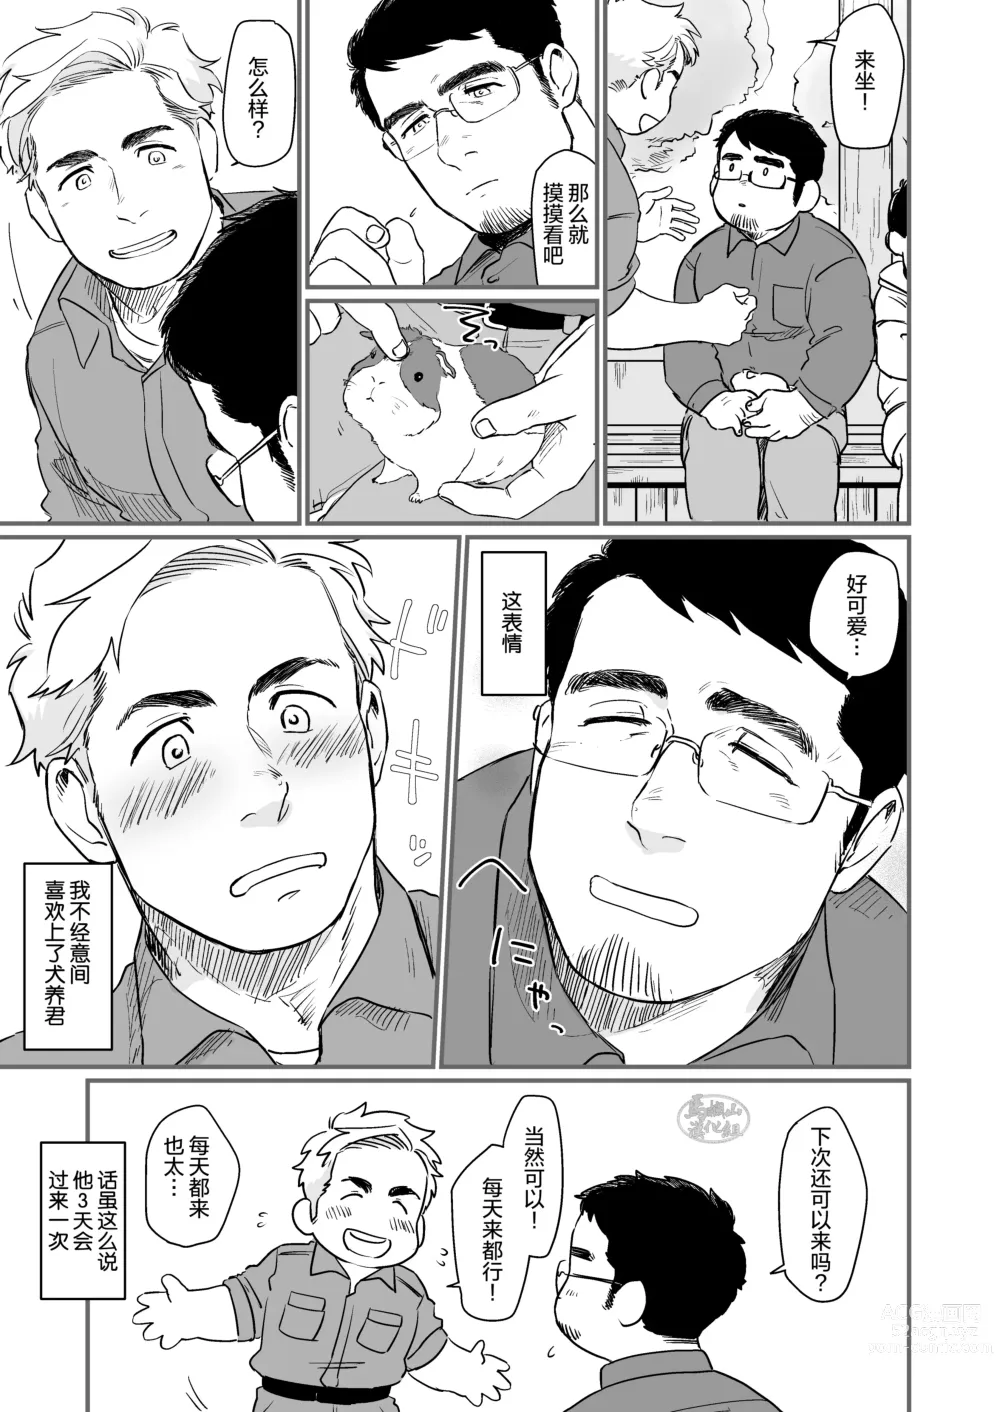 Page 5 of manga ビースティコンプレックス.动物狂想曲